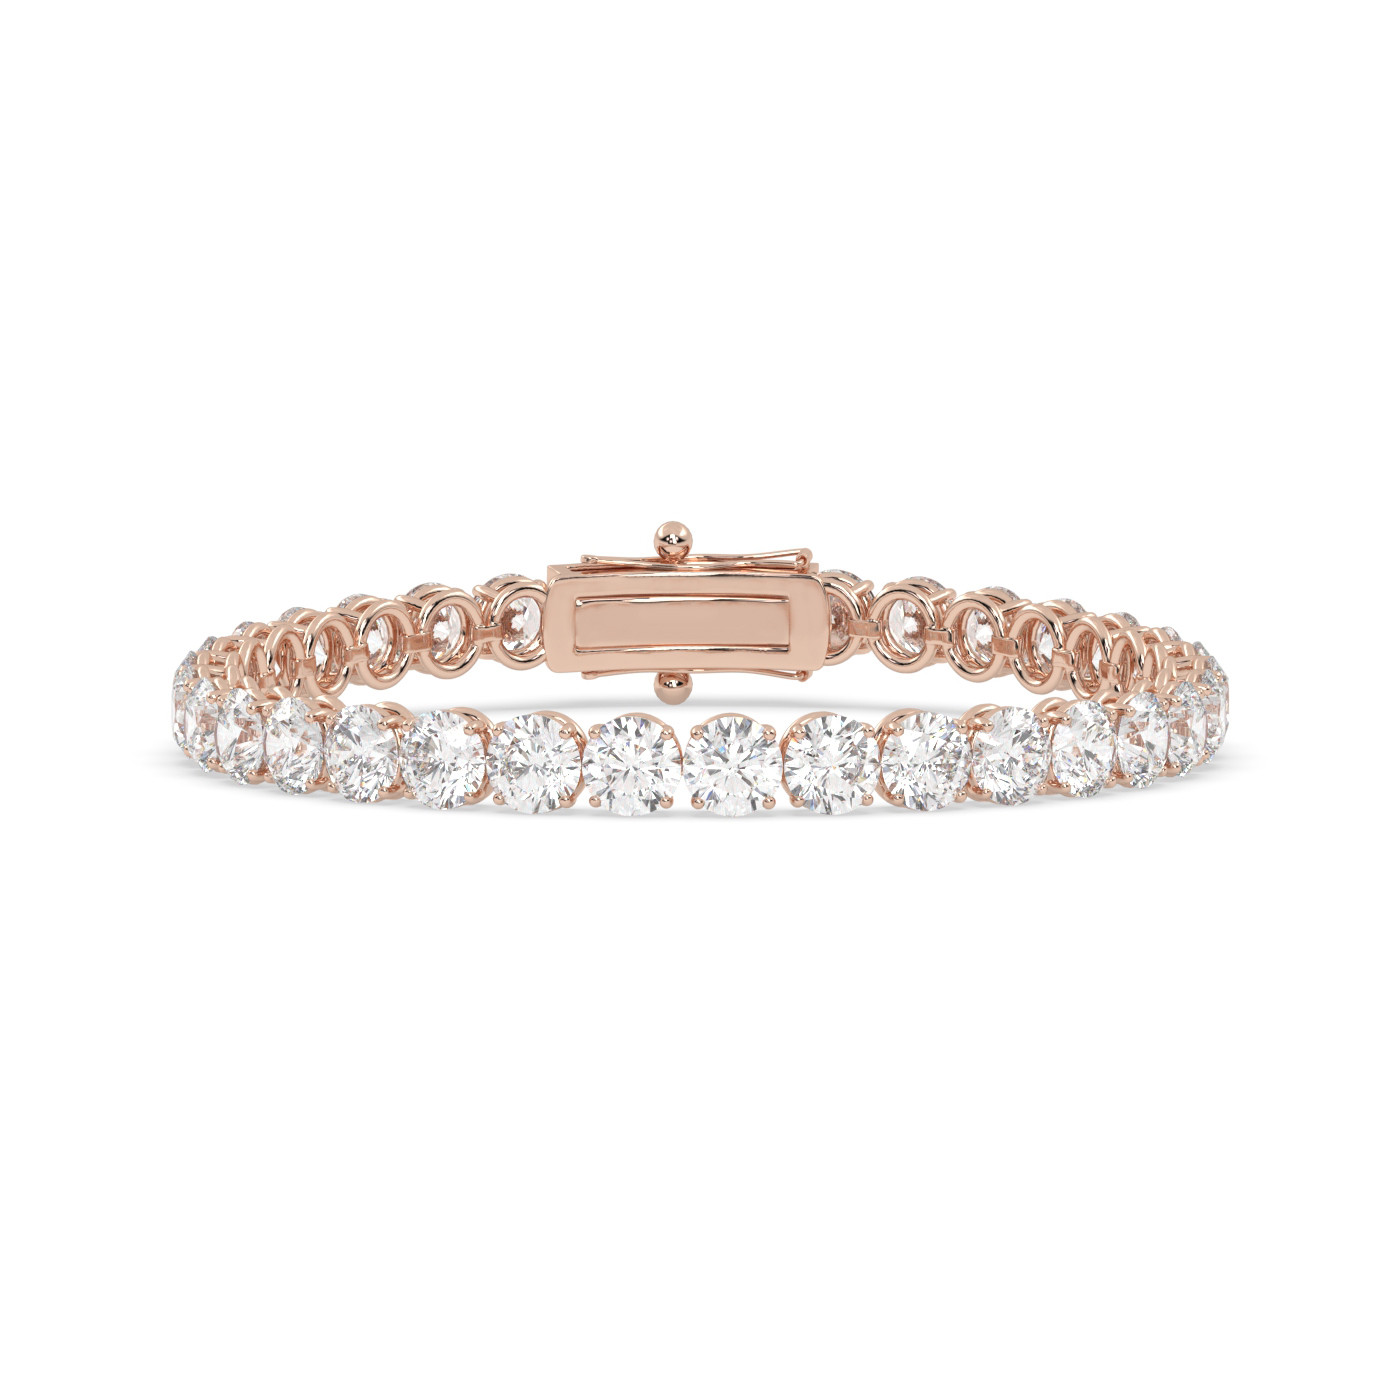 18k rose gold 17 carat round diamond tennis bracelet with traditional lock sytem